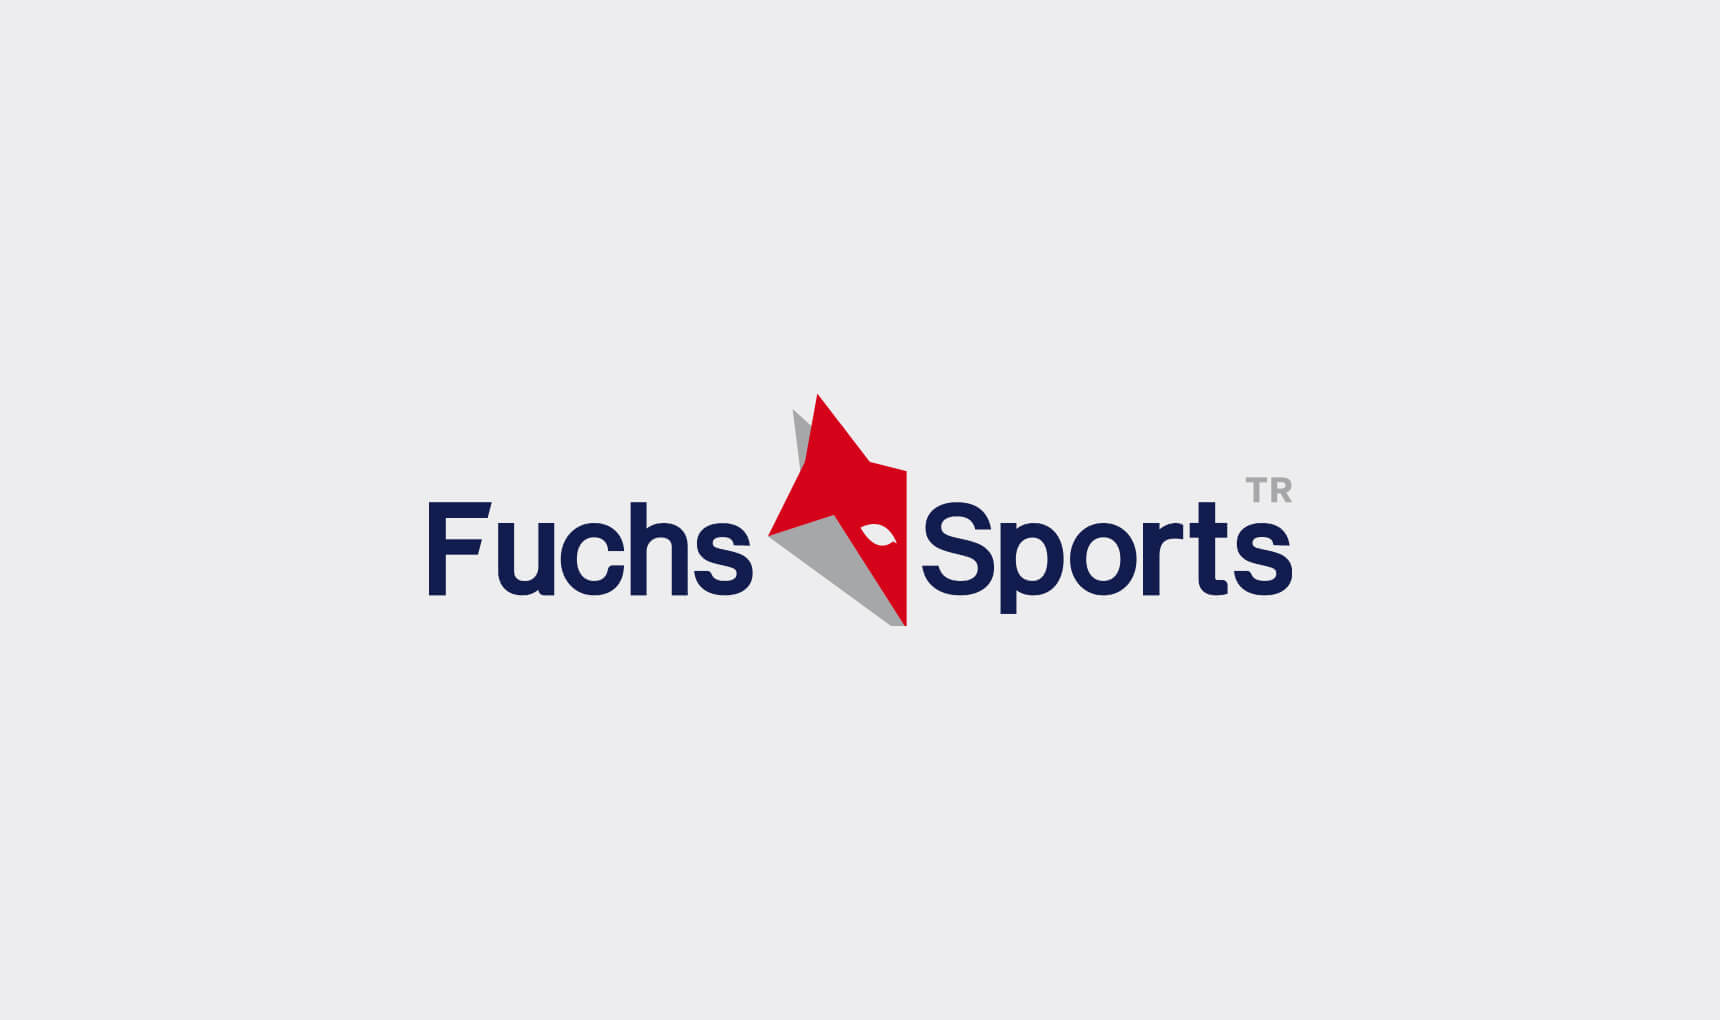 Fuchs Sports-metin 1-5- amblem-metin 2-6- sketch mockup-7- brand-screen-8- logo